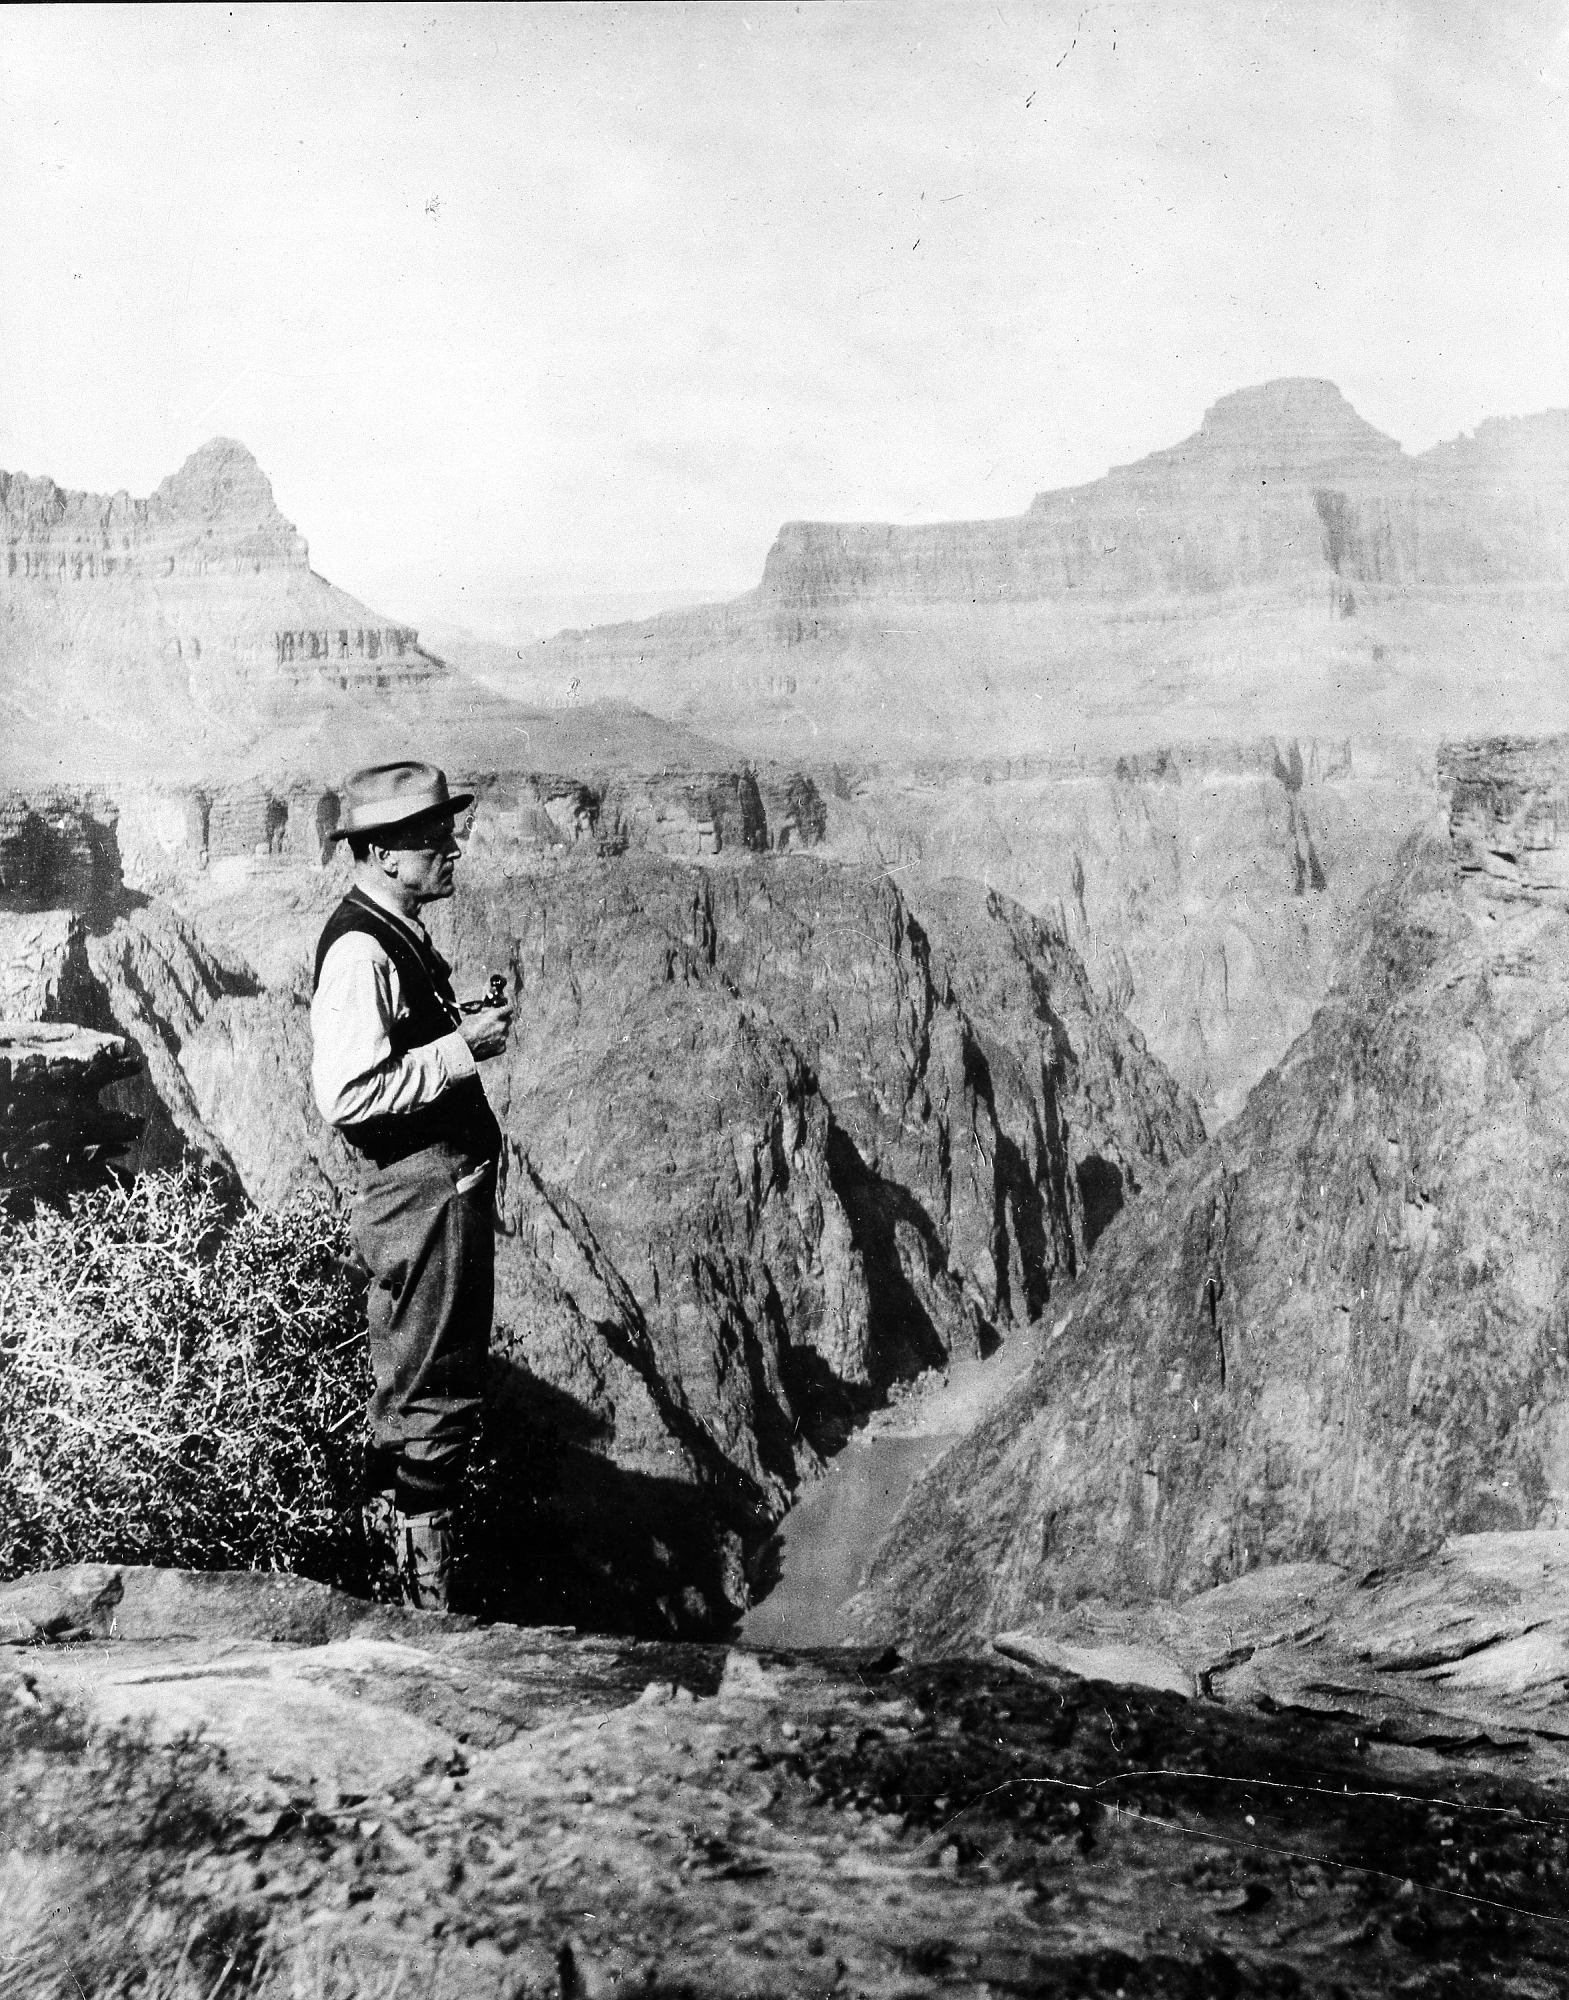 B&W image of man overlooking mountainous landscape.